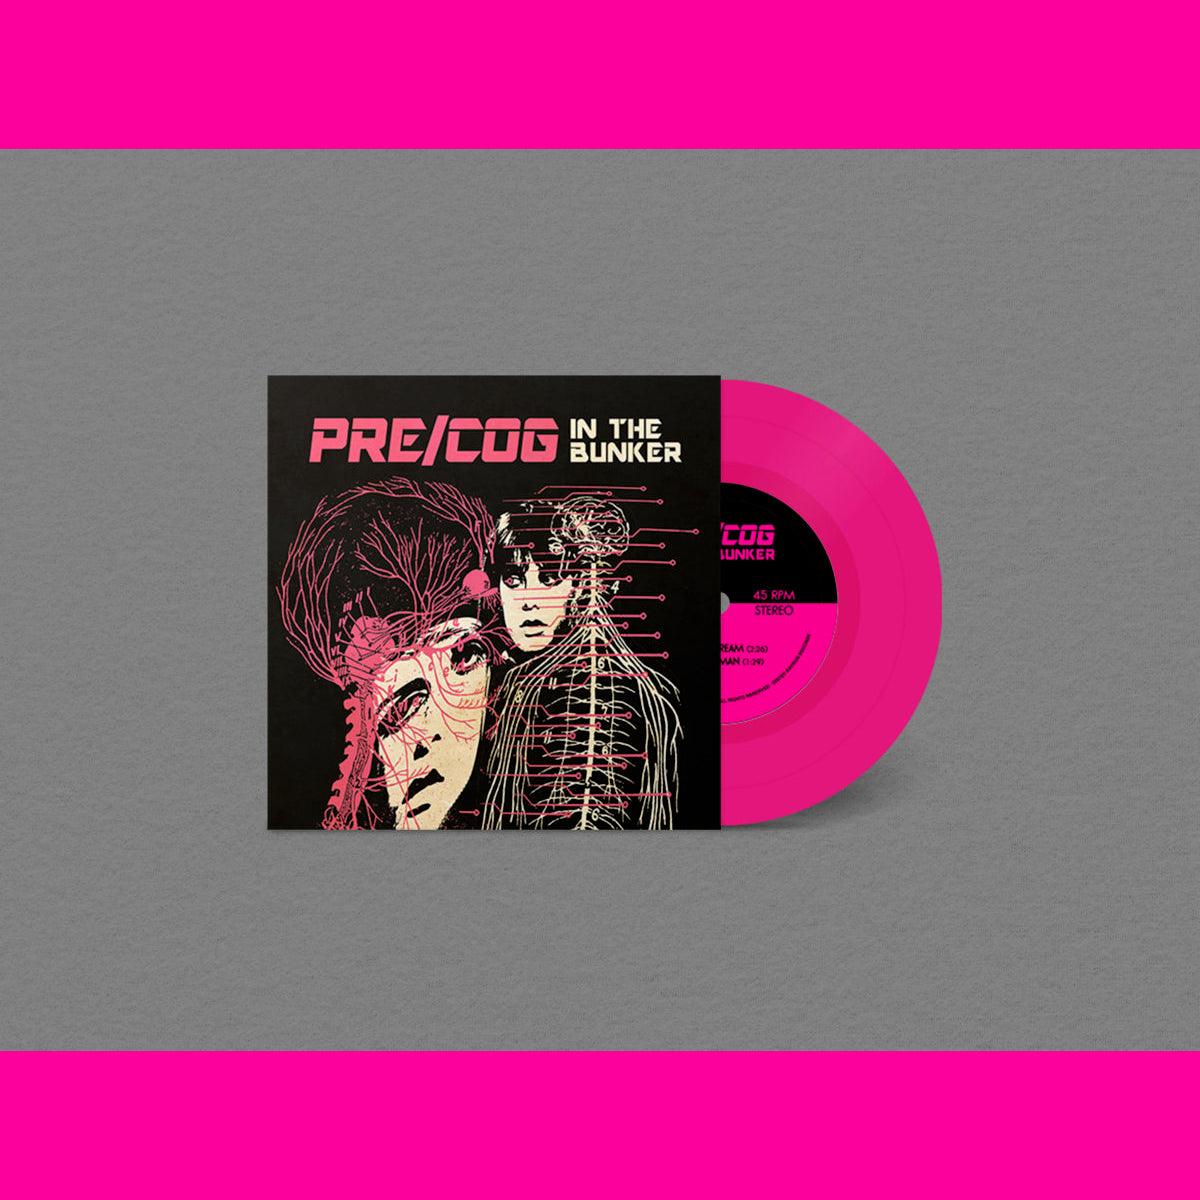 Pre/Cog In The Bunker- Precog’s Dream 7" ~RARE OPAQUE MAGENTA WAX LTD TO 100!